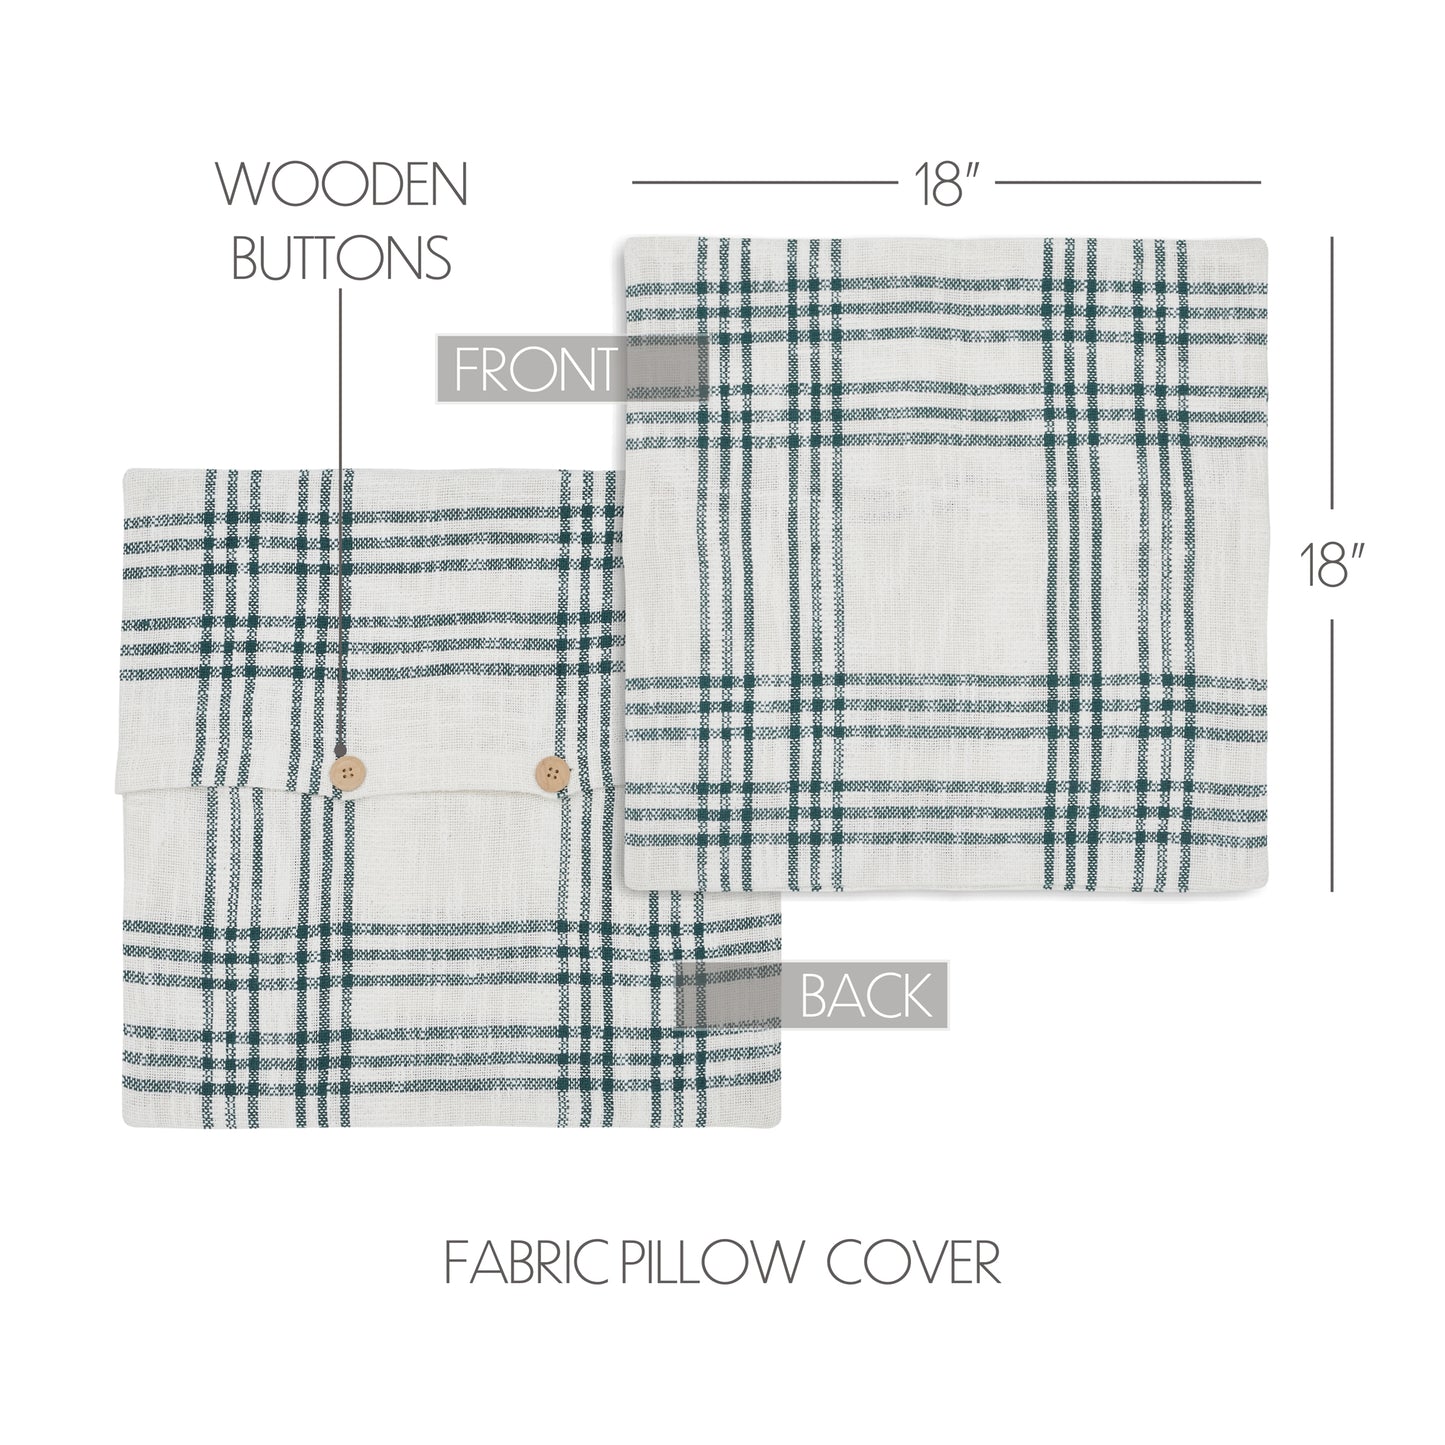 80415-Pine-Grove-Plaid-Fabric-Pillow-Cover-18x18-image-1